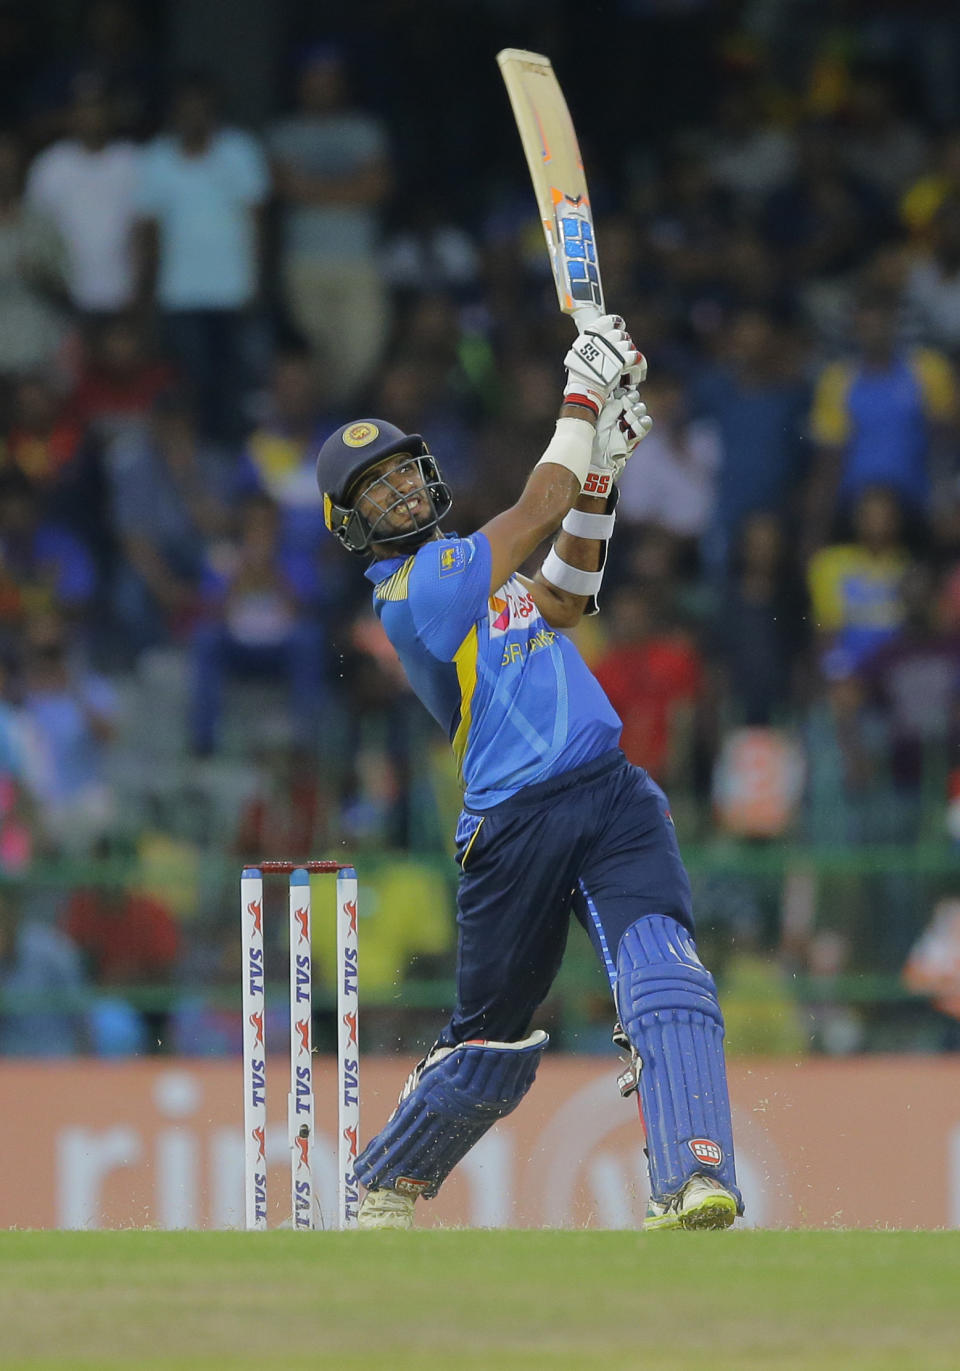 Sri Lanka's Dasun Shanaka plays a shot during the third one-day international cricket match between Sri Lanka and Bangladesh in Colombo, Sri Lanka, Wednesday, July 31, 2019. (AP Photo/Eranga Jayawardena)